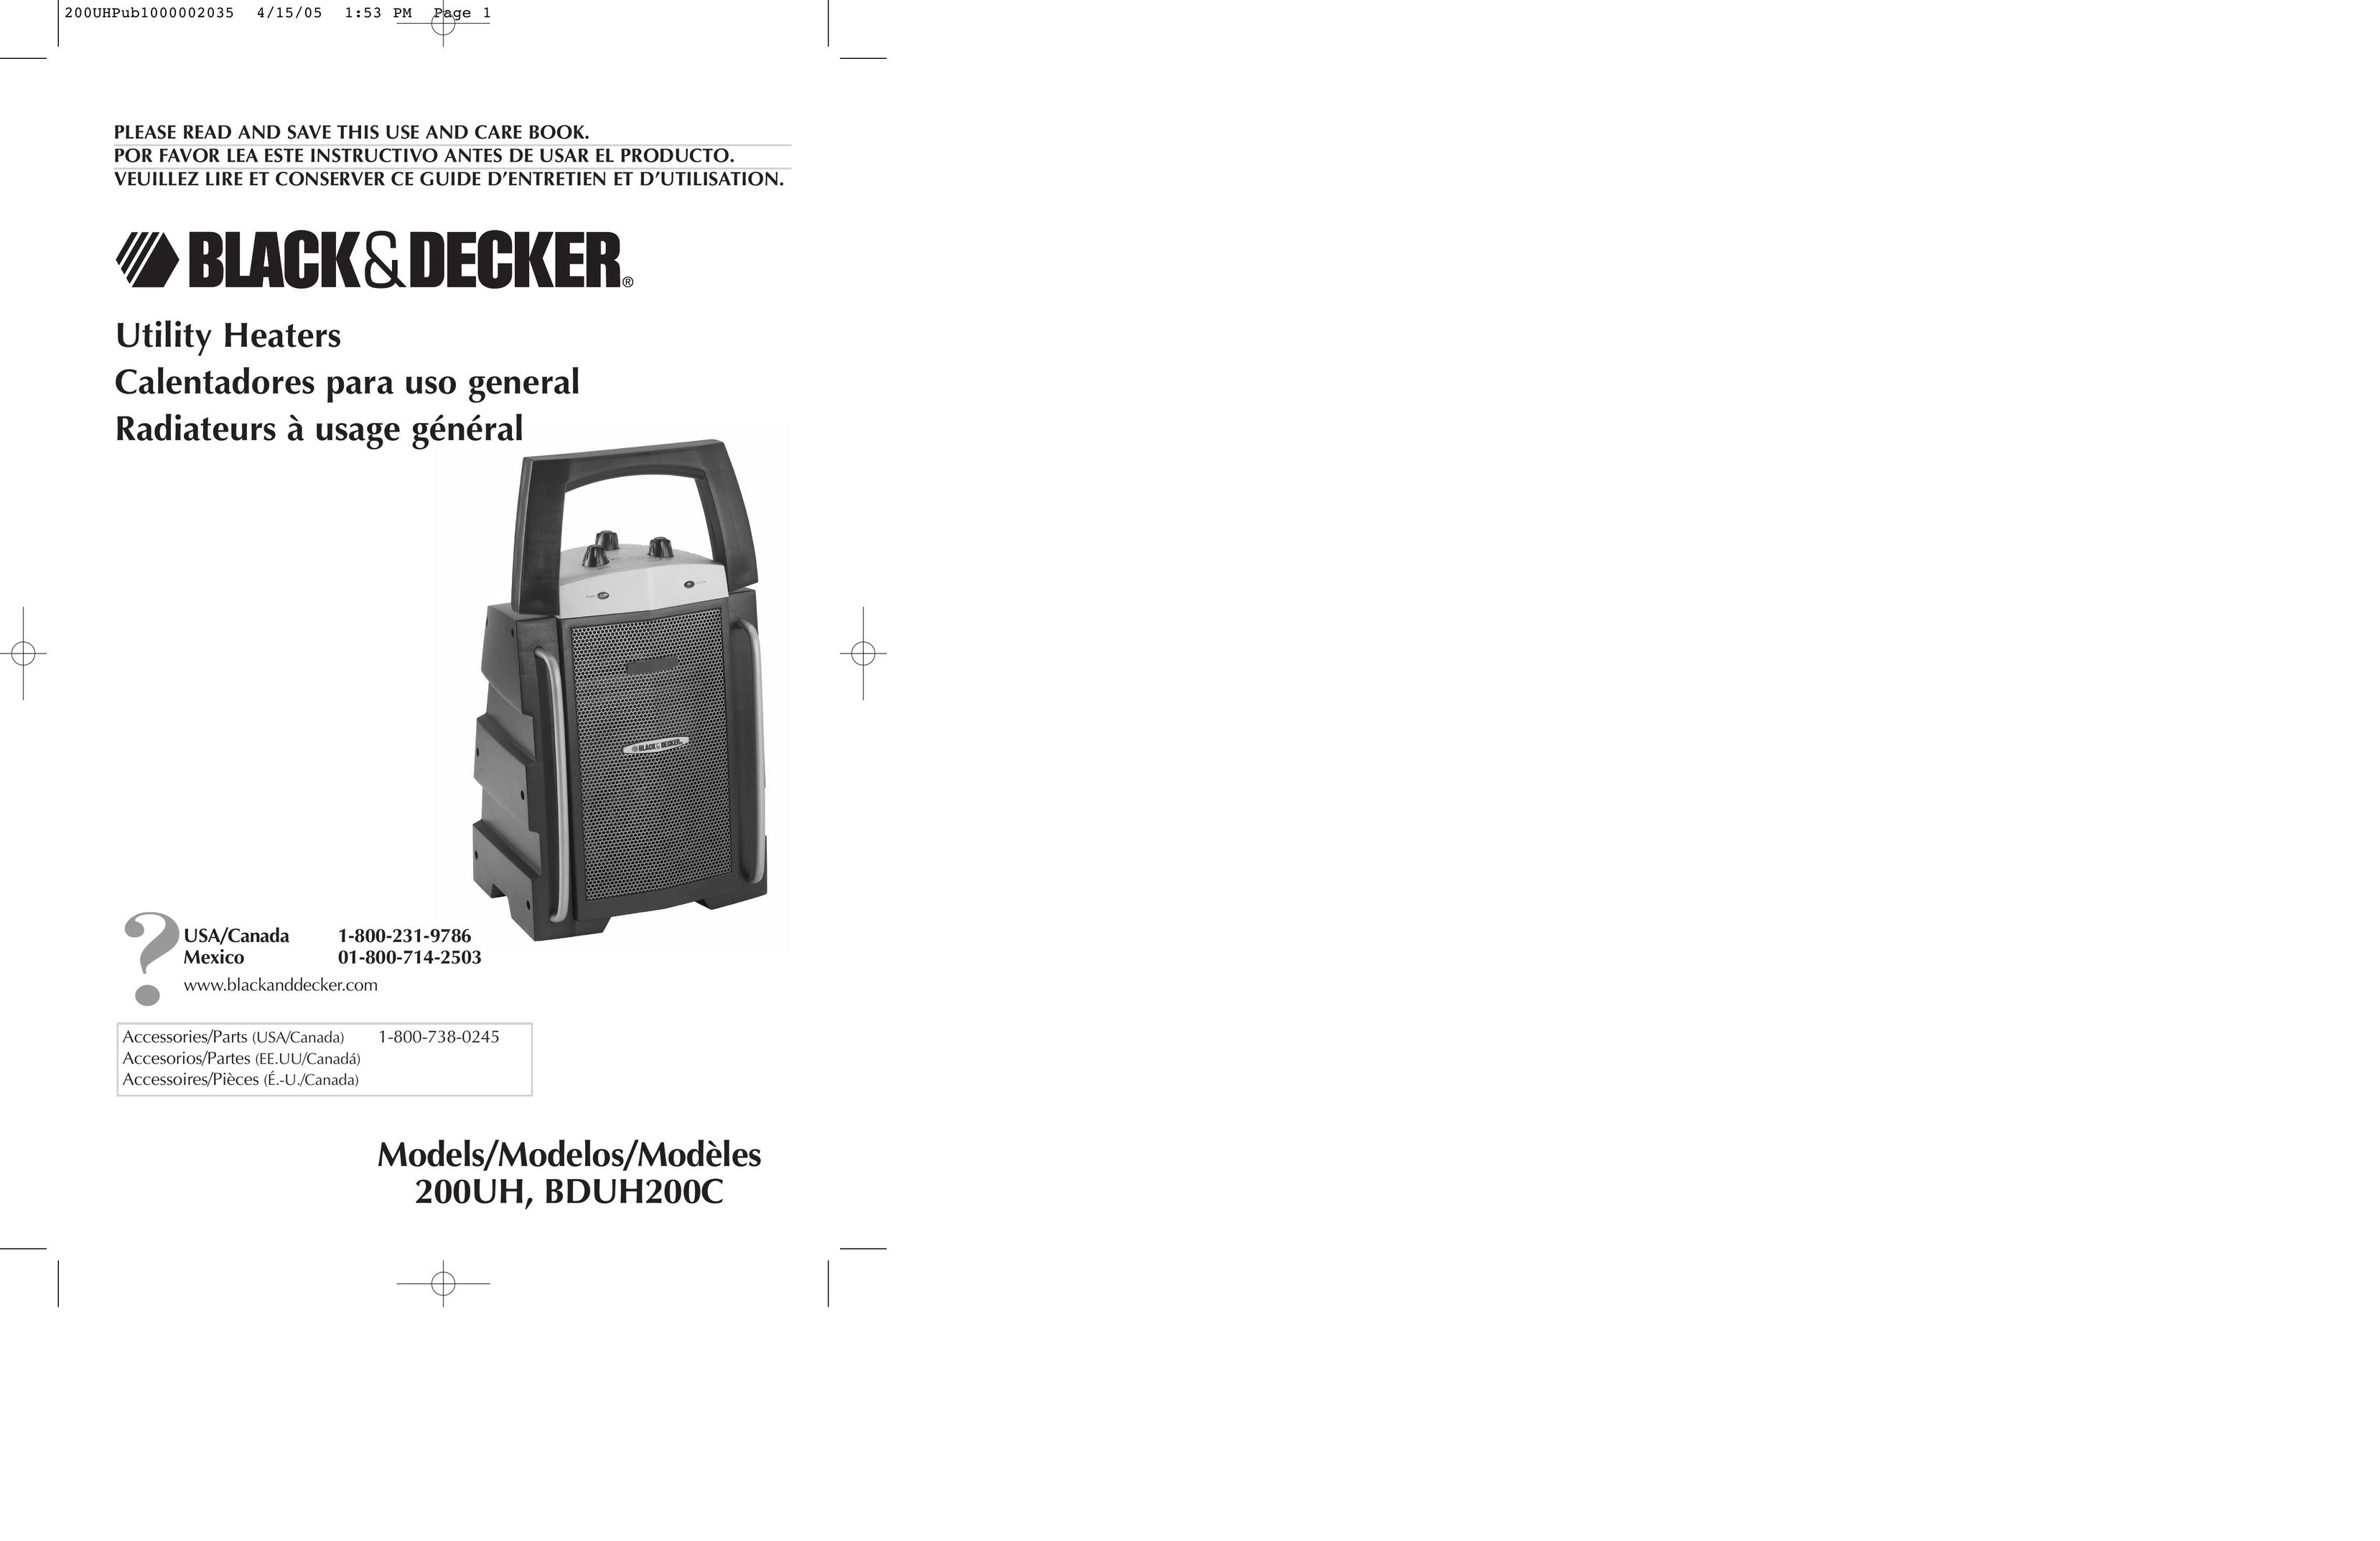 Black & Decker BDUH200C Electric Heater User Manual